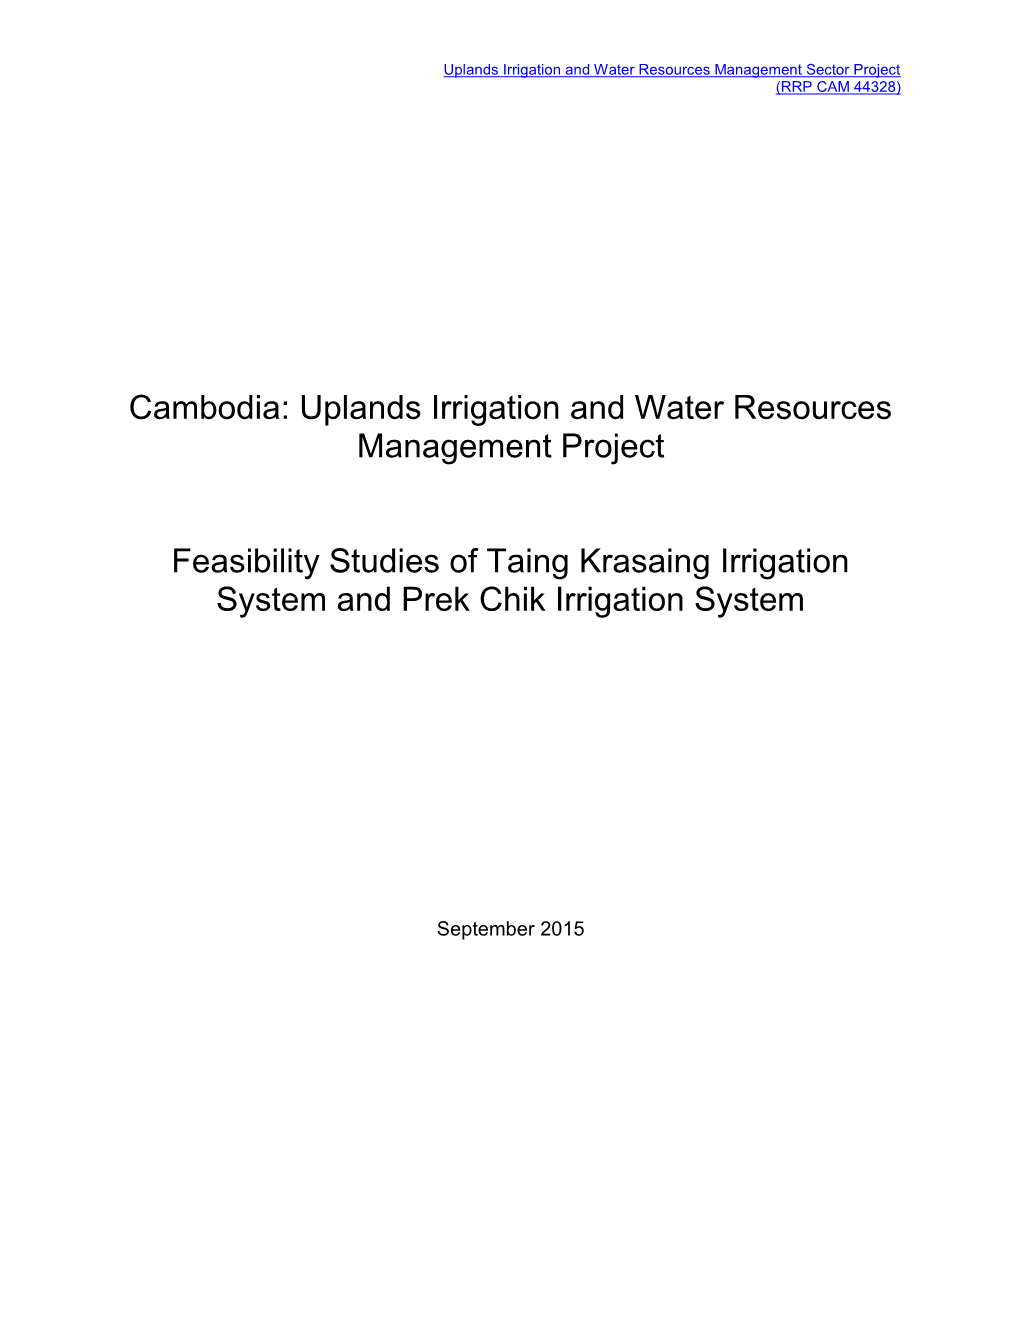 Feasibility Studies of Taing Krasaing Irrigation System and Prek Chik Irrigation System